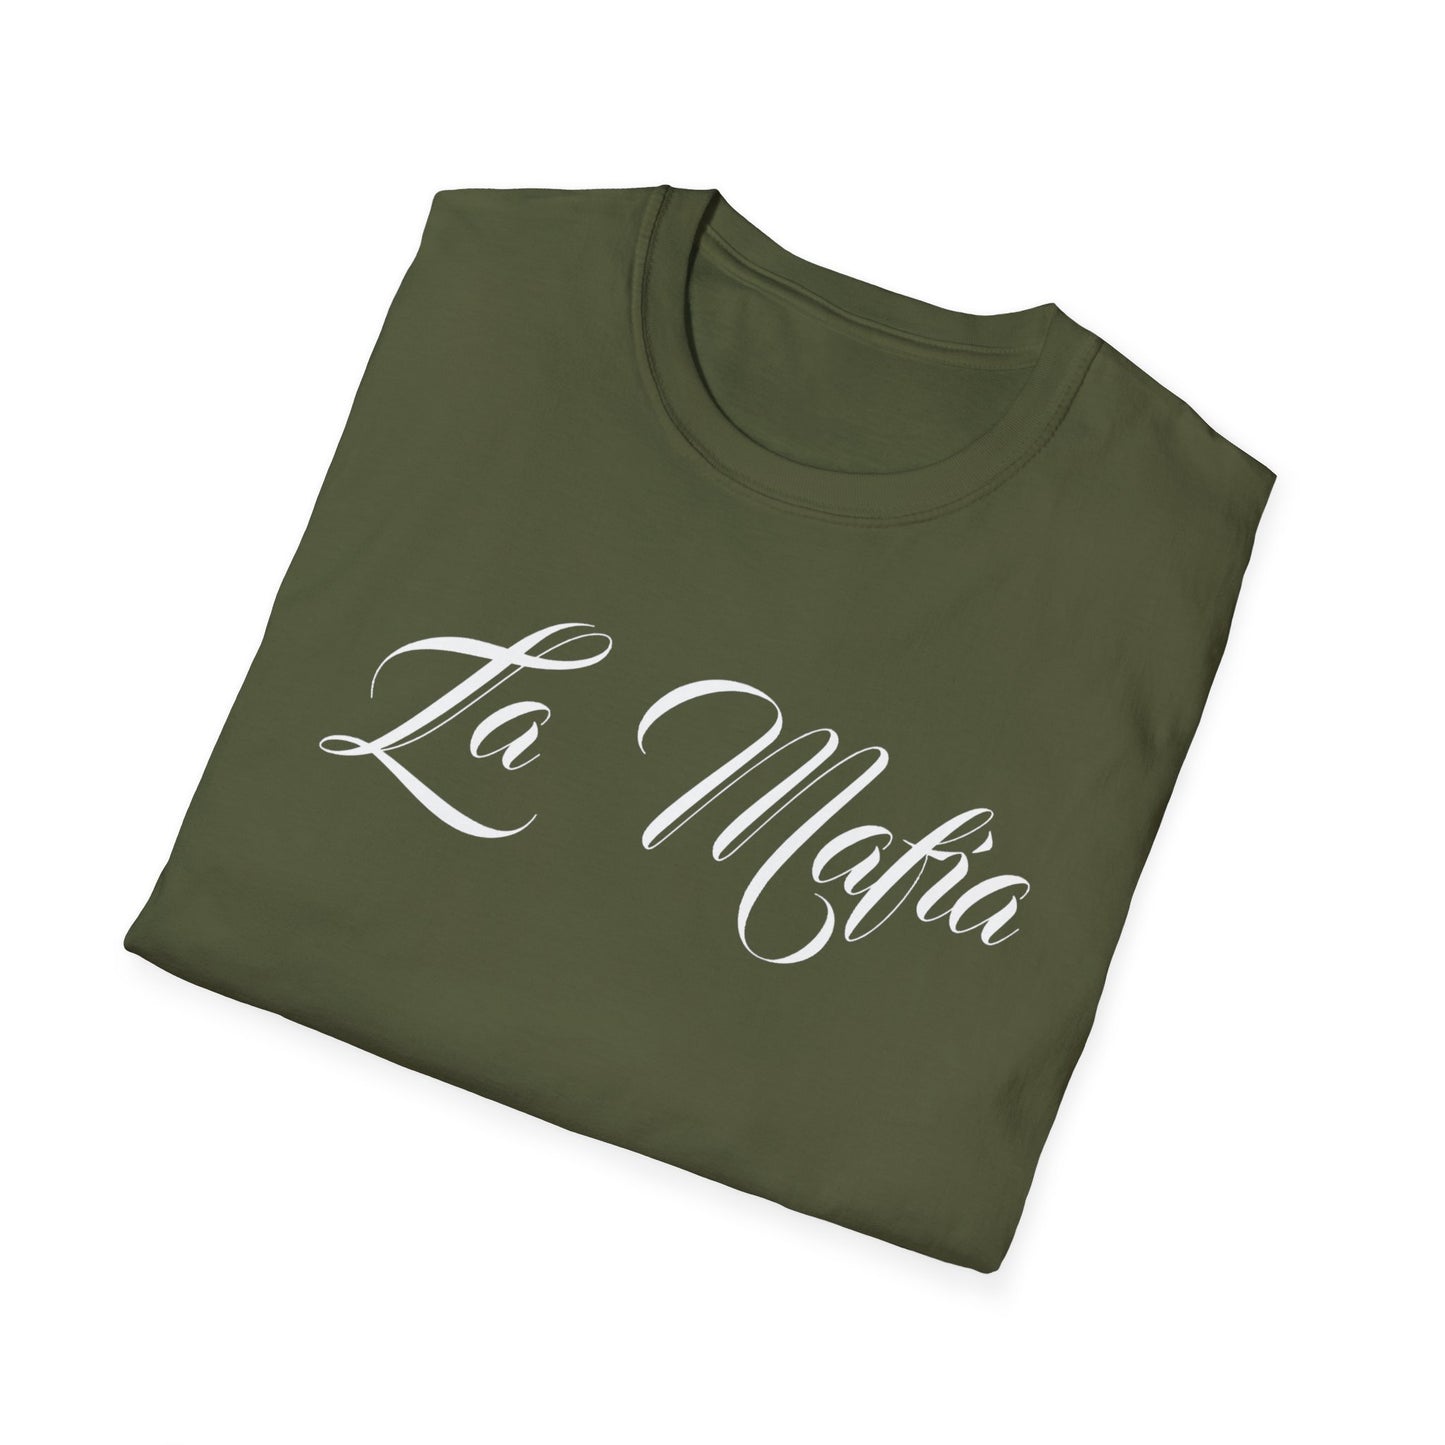 La Mafia | Unisex T-Shirt